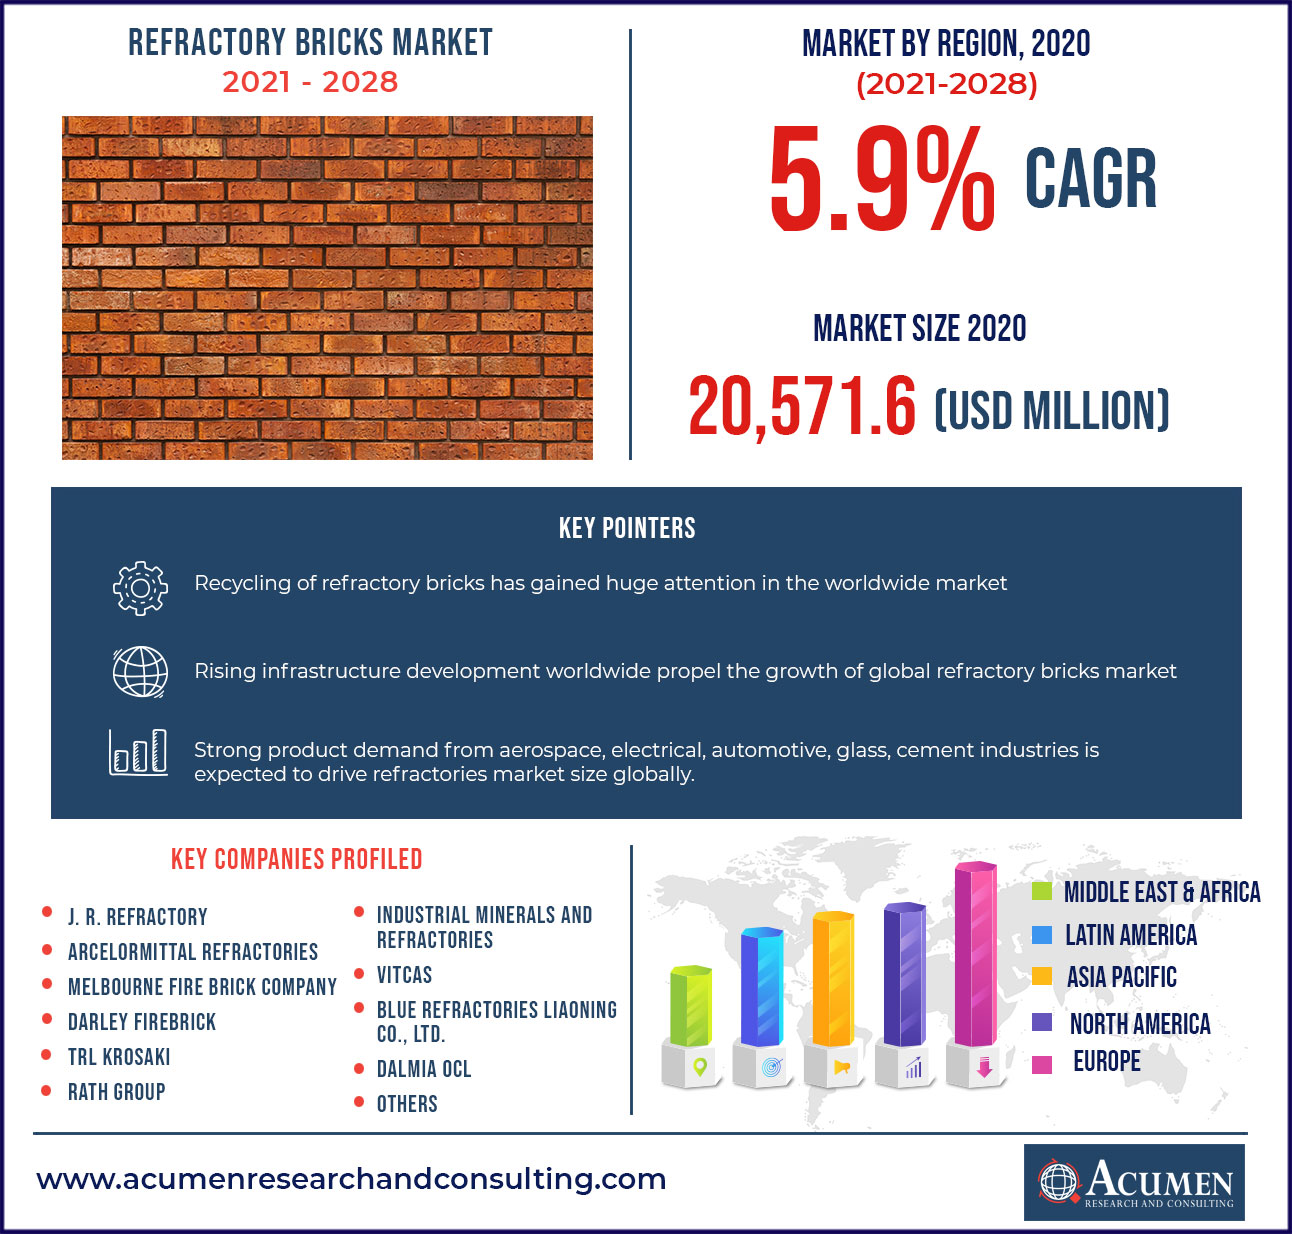 Refractory Bricks Market Size 2021 - 2028